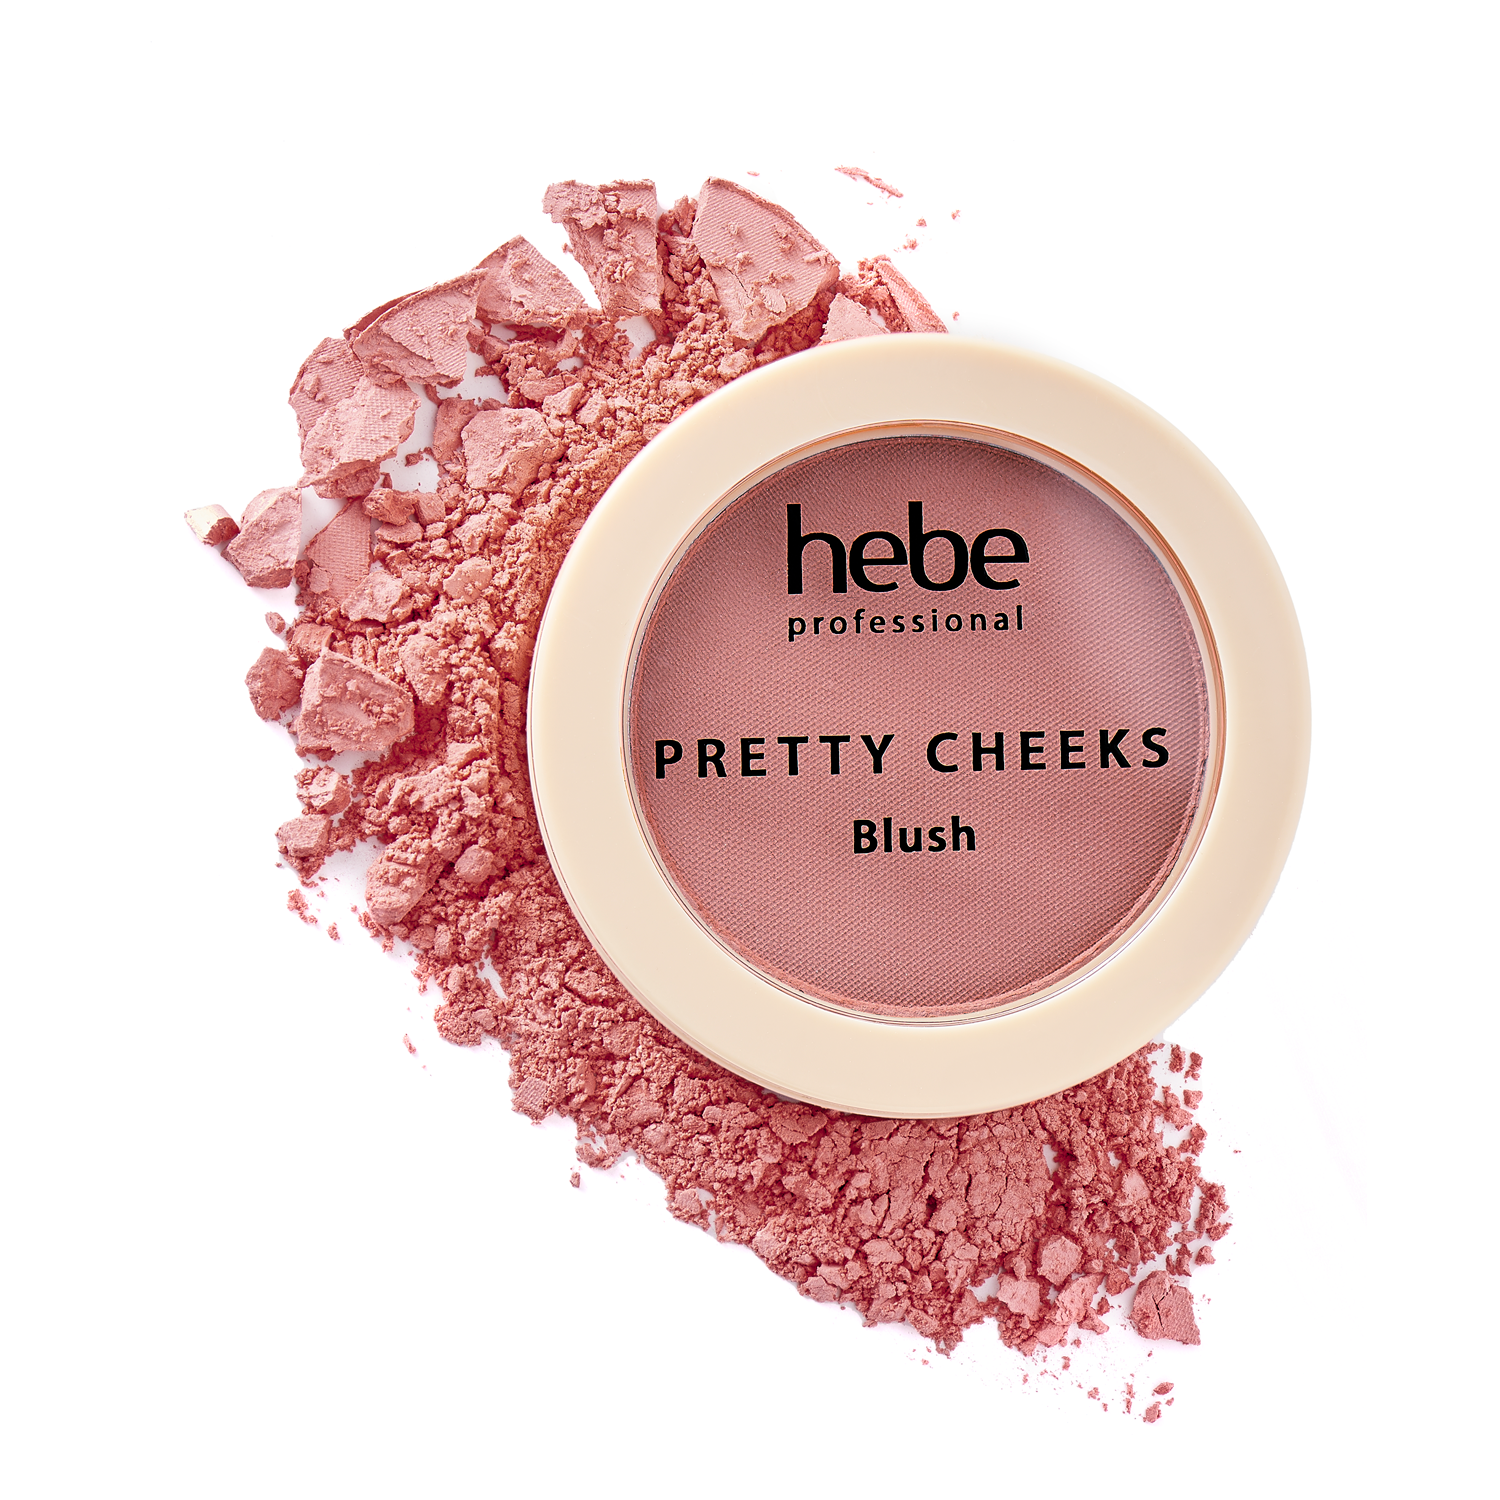 Теплые лиловые румяна Hebe Professional Pretty Cheeks Blush, 3,5 гр hebe